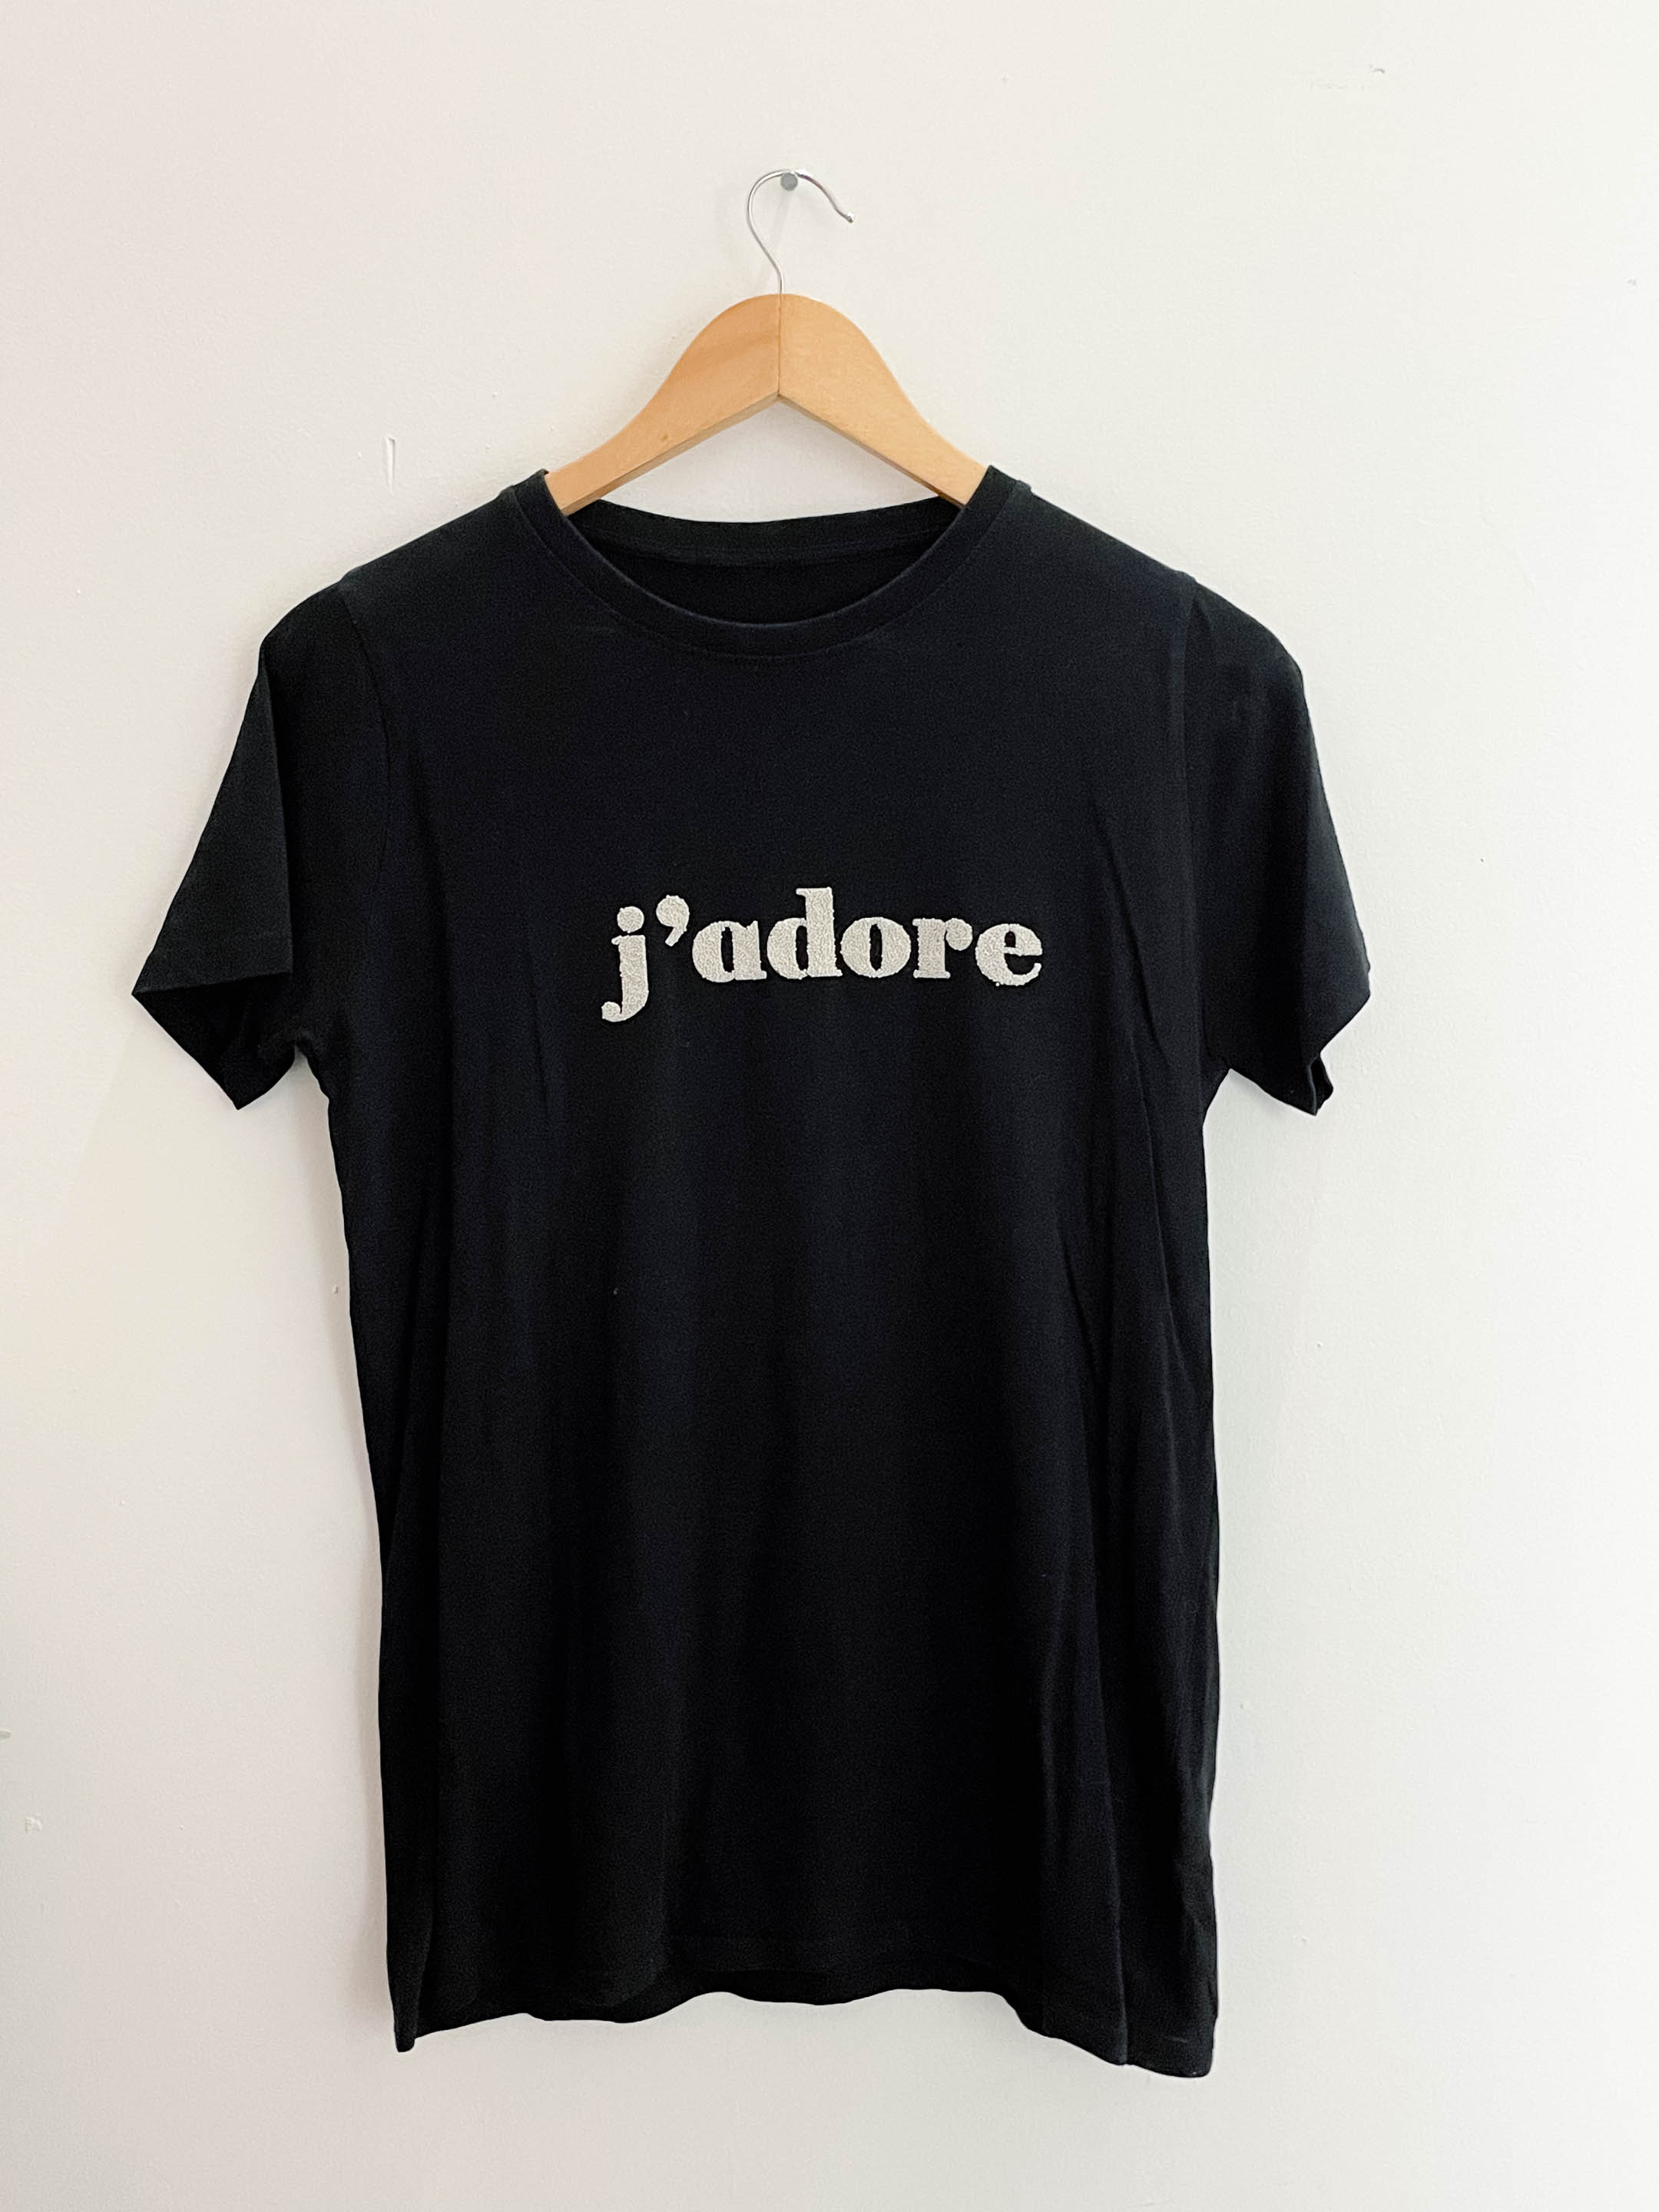 Vintage J'adore graphics black tshirt size uk 10